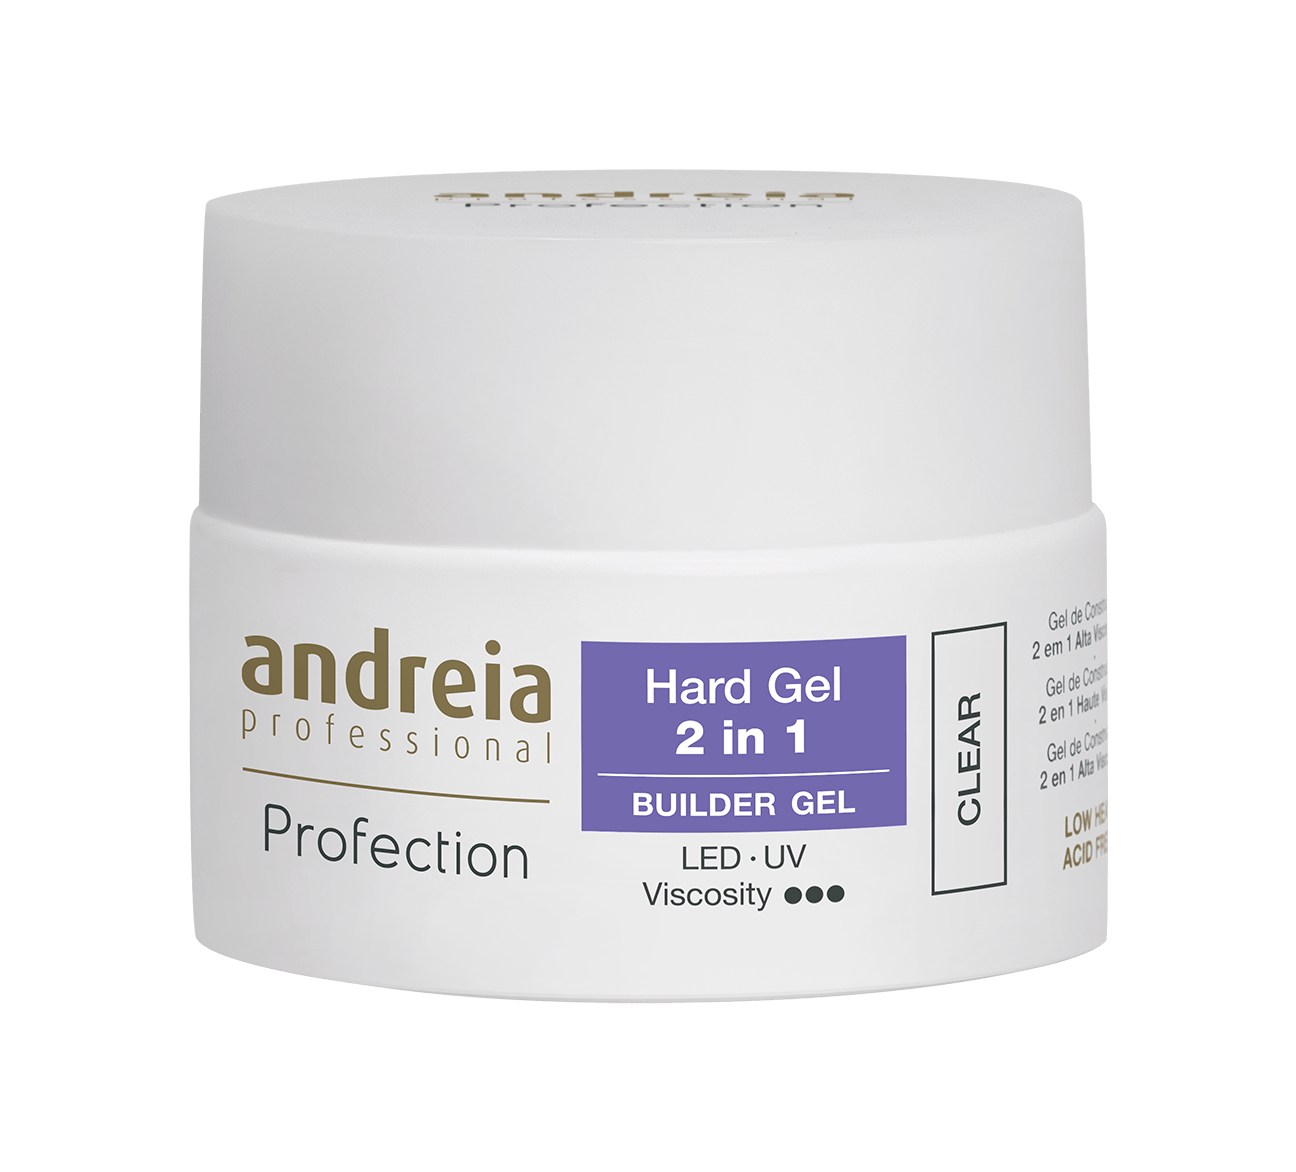 Andreia Professional Profection Hard Gel 2 en 1 Clear 44g